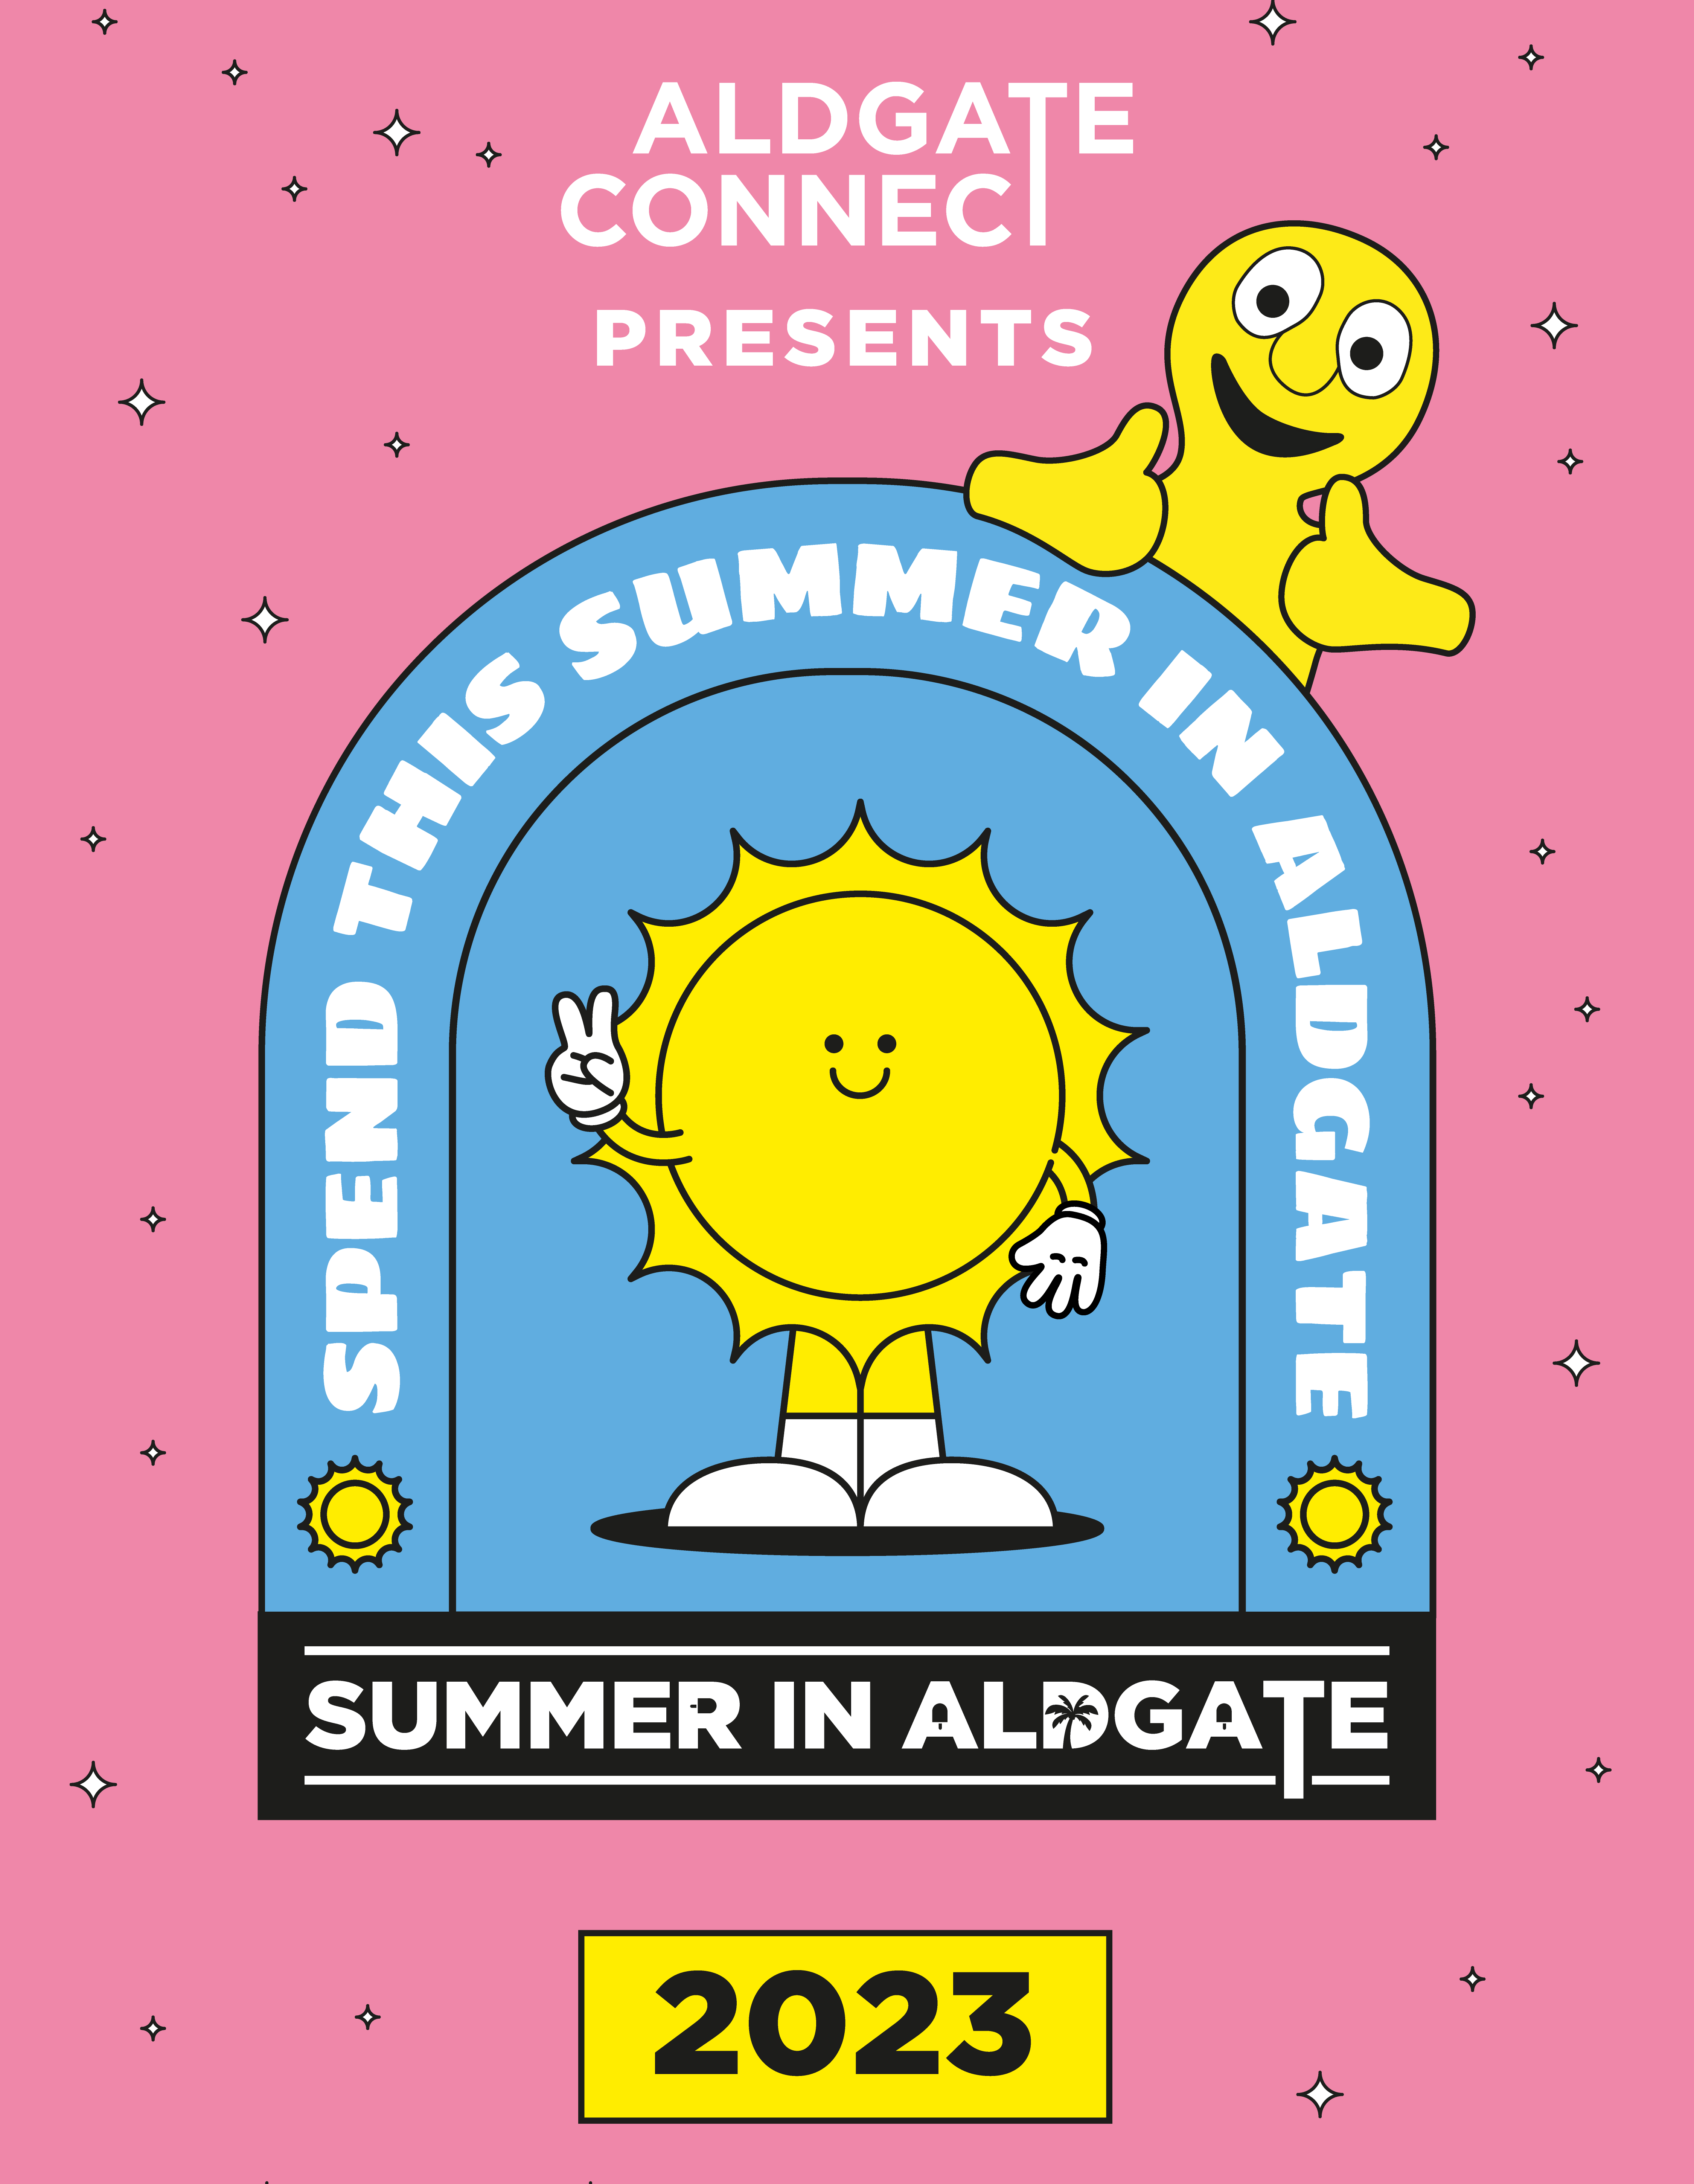 Summer in Aldgate 2023